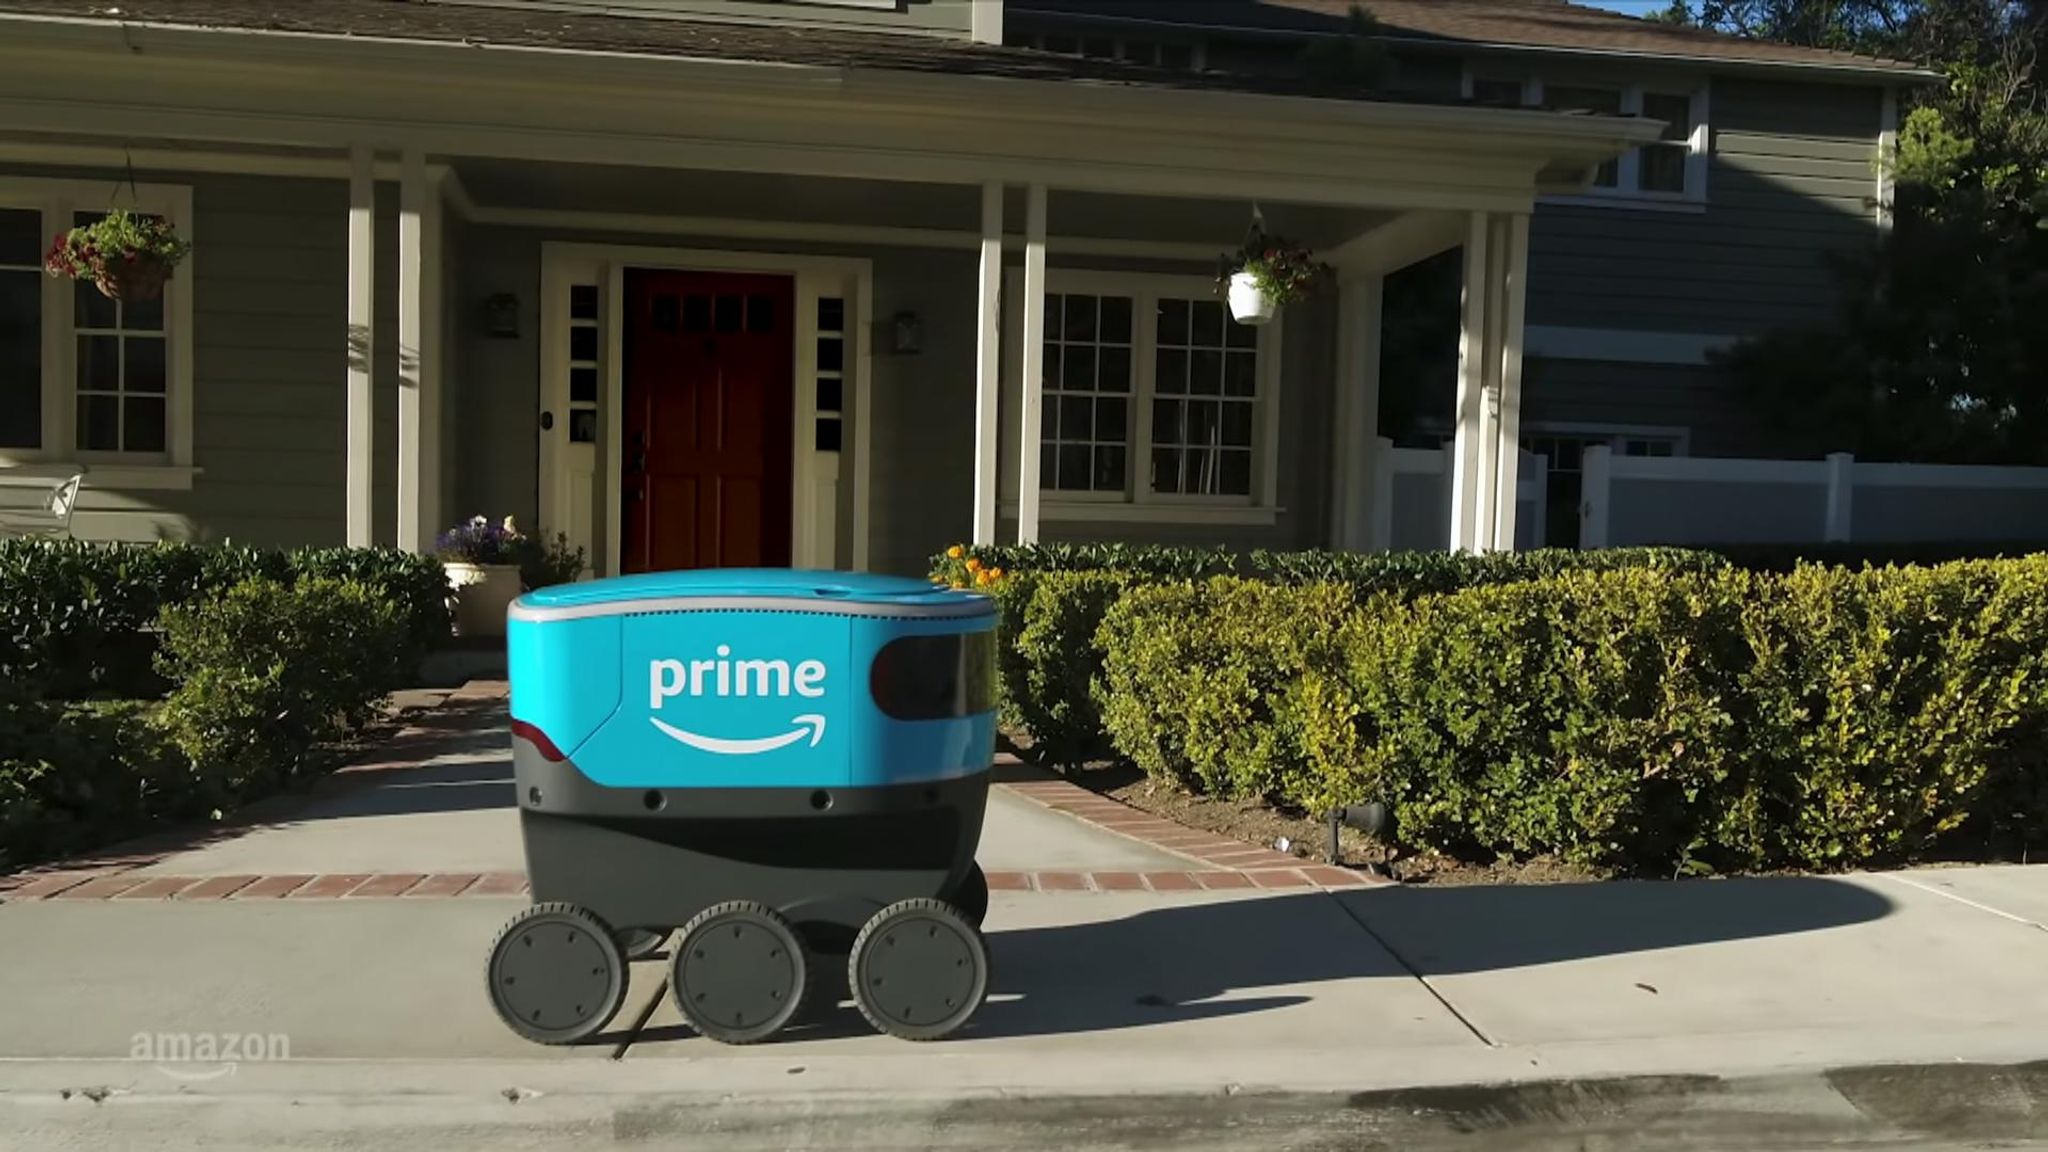 Delivery arrived. Робот доставщик Amazon. Робот курьер Амазон. Amazon Scout робот. Робот почтальон.